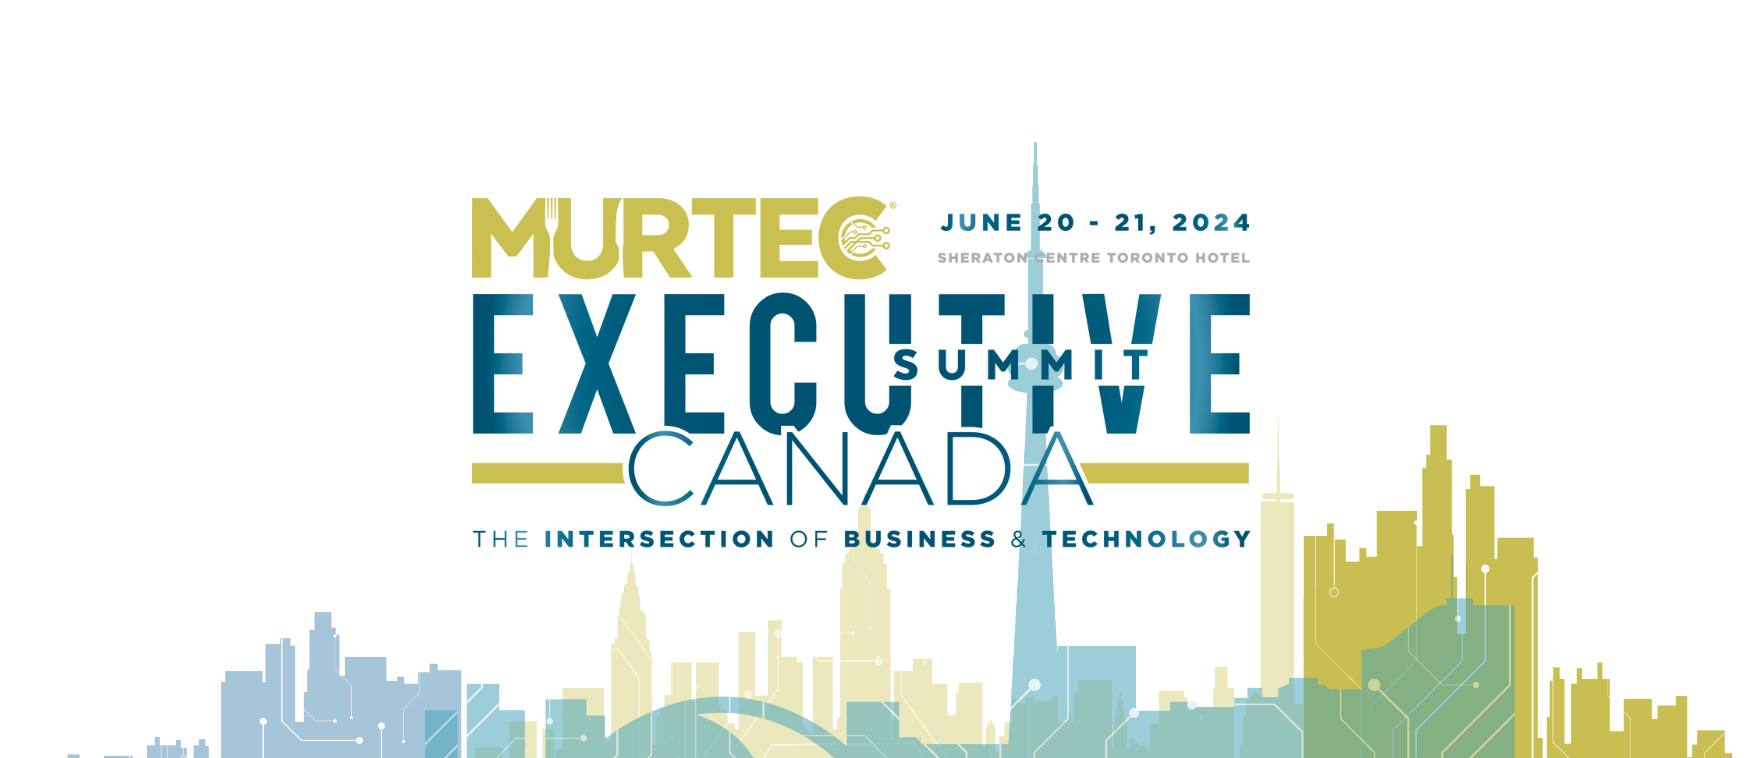 MURTEC Executive Summit come to Canada June 20-21, 2024